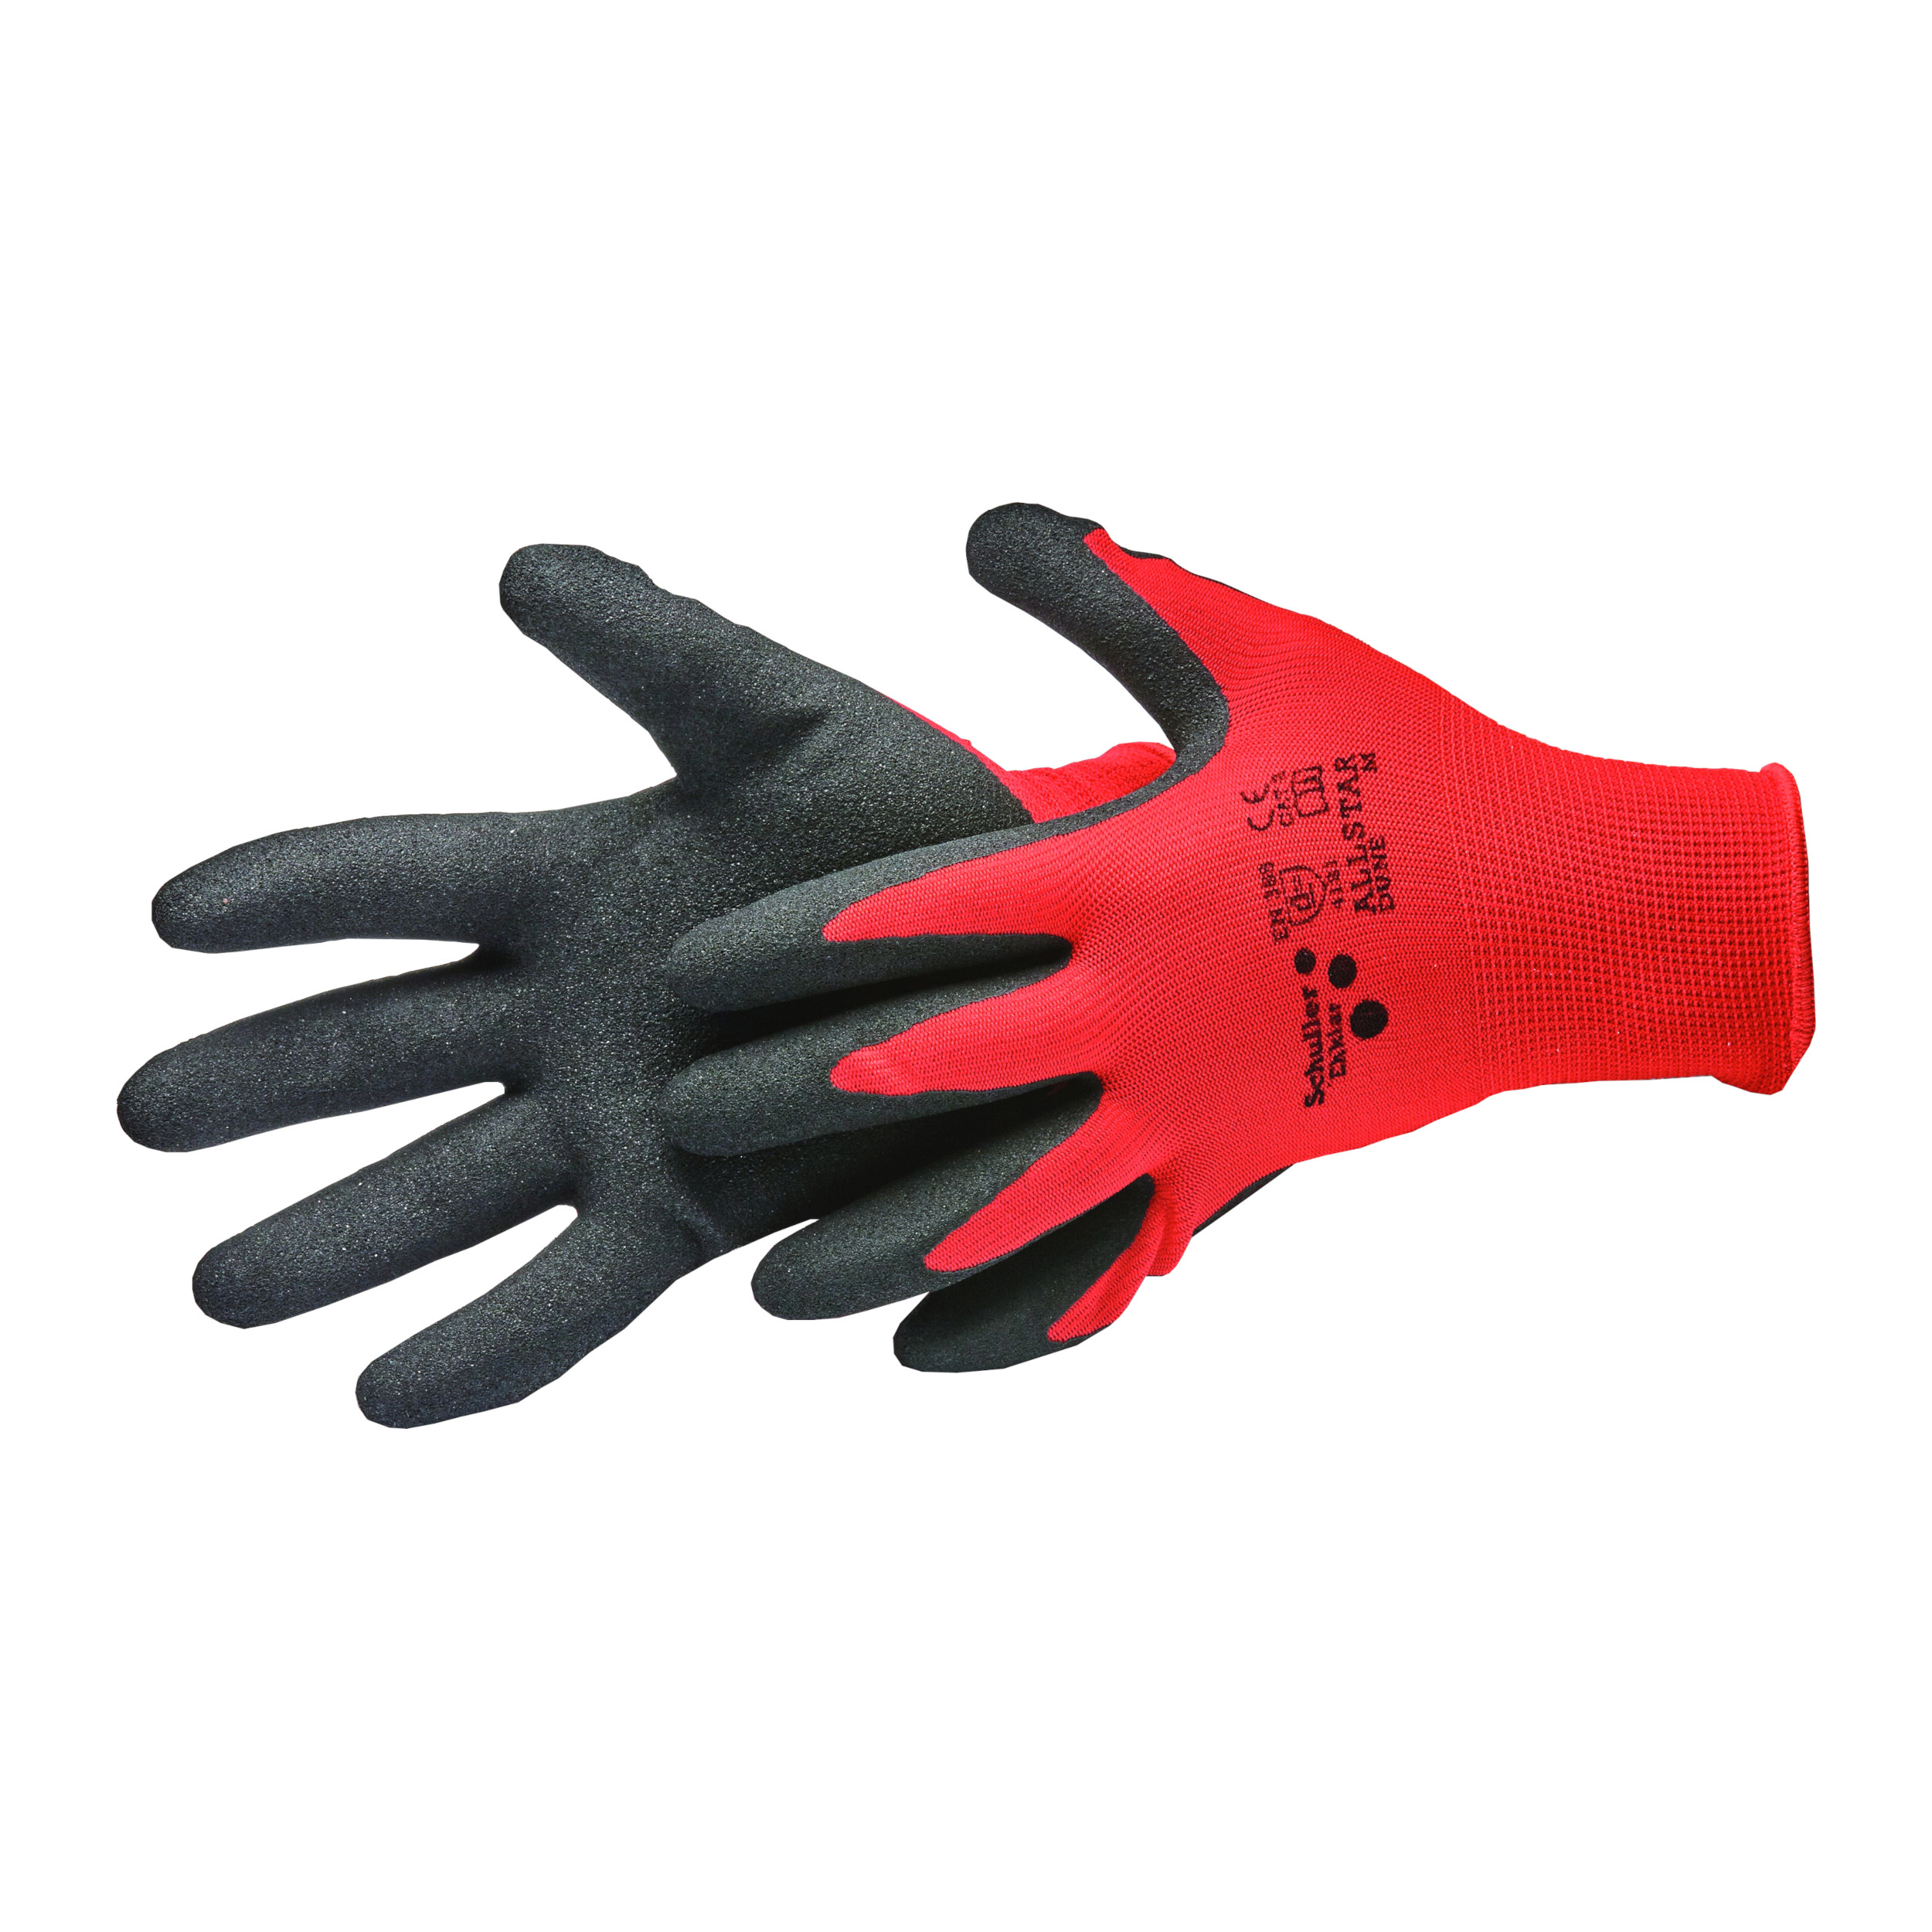 rukavice ALLSTAR, s nitrilovým potahem a úpletem, velikost 9 0.07 Kg TOP Sklad4 600119 299